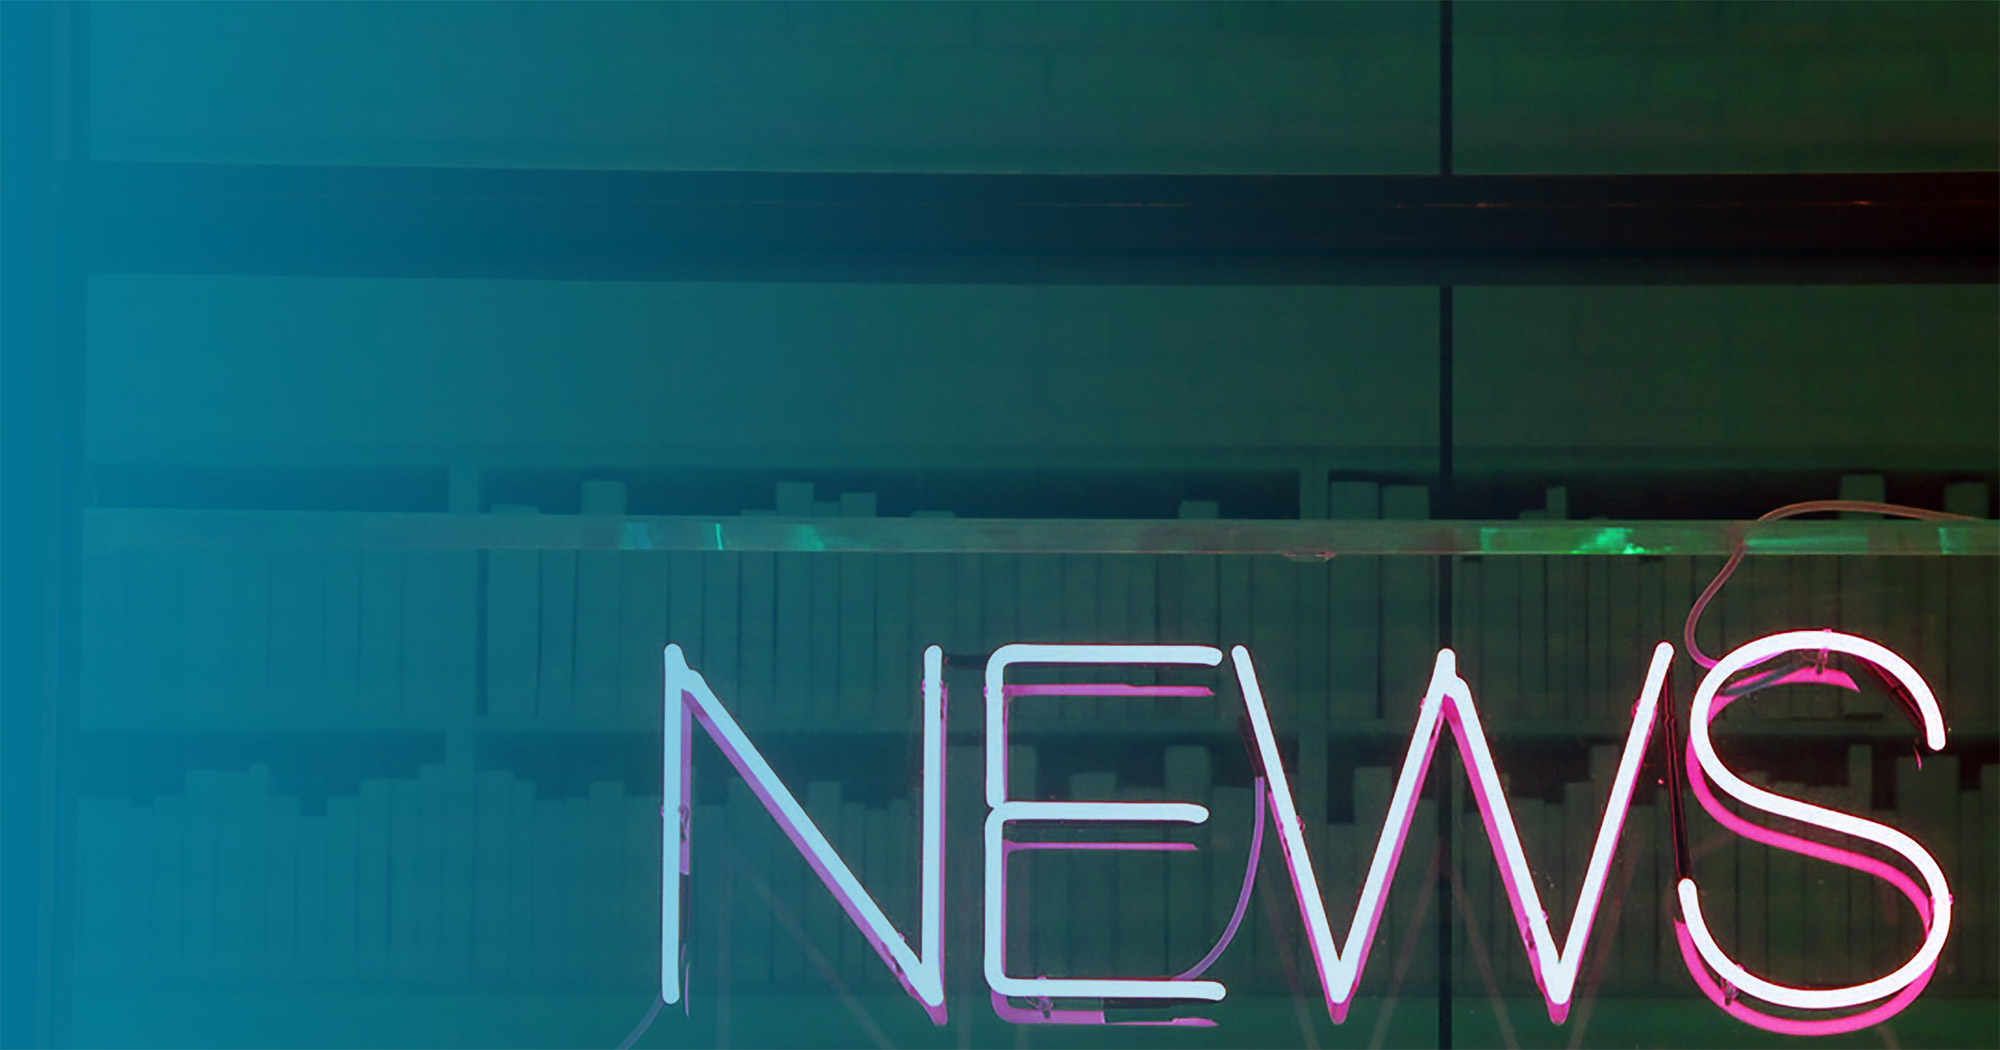 Neon News Sign